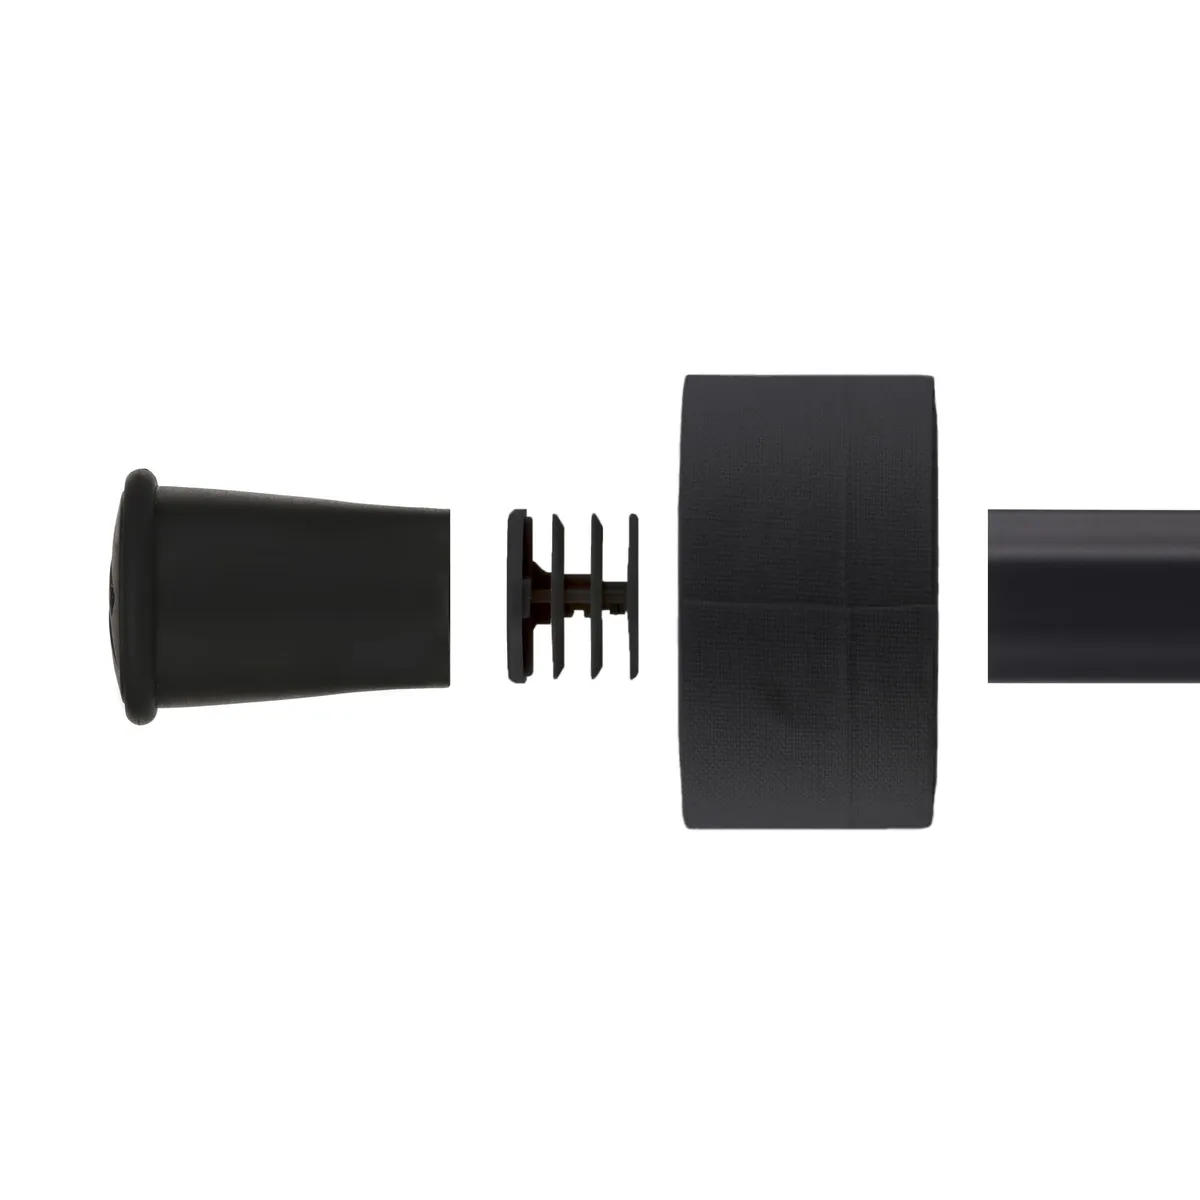 StringKing Metal 3 Pro Defense Lacrosse Shaft Accessories Black